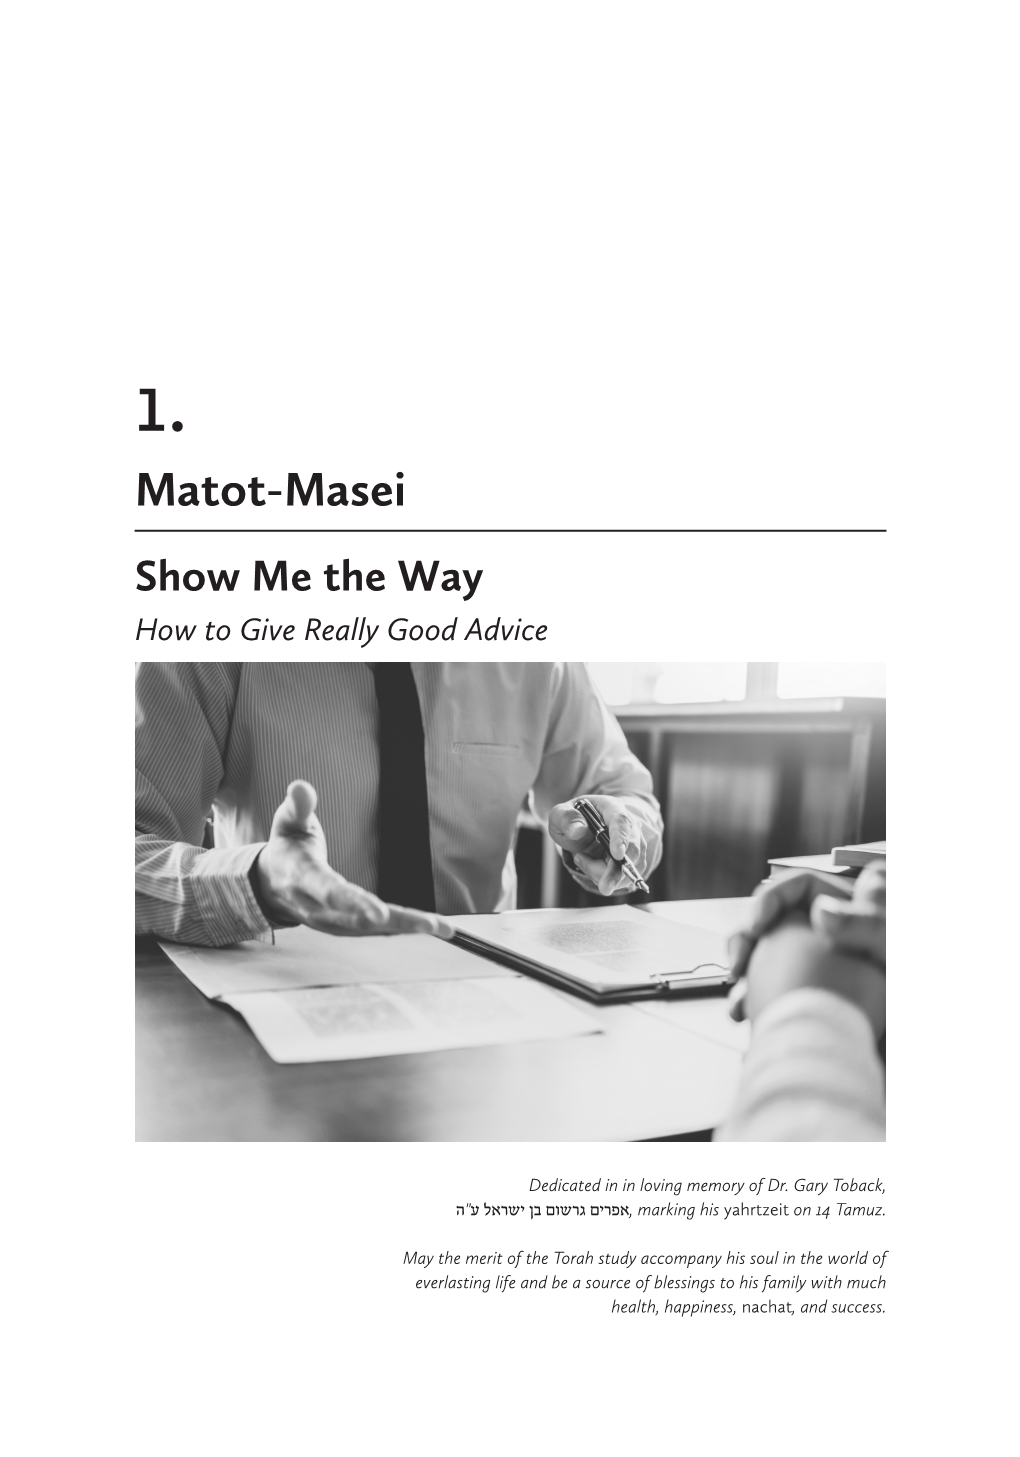 Matot-Masei Show Me the Way How to Give Really Good Advice